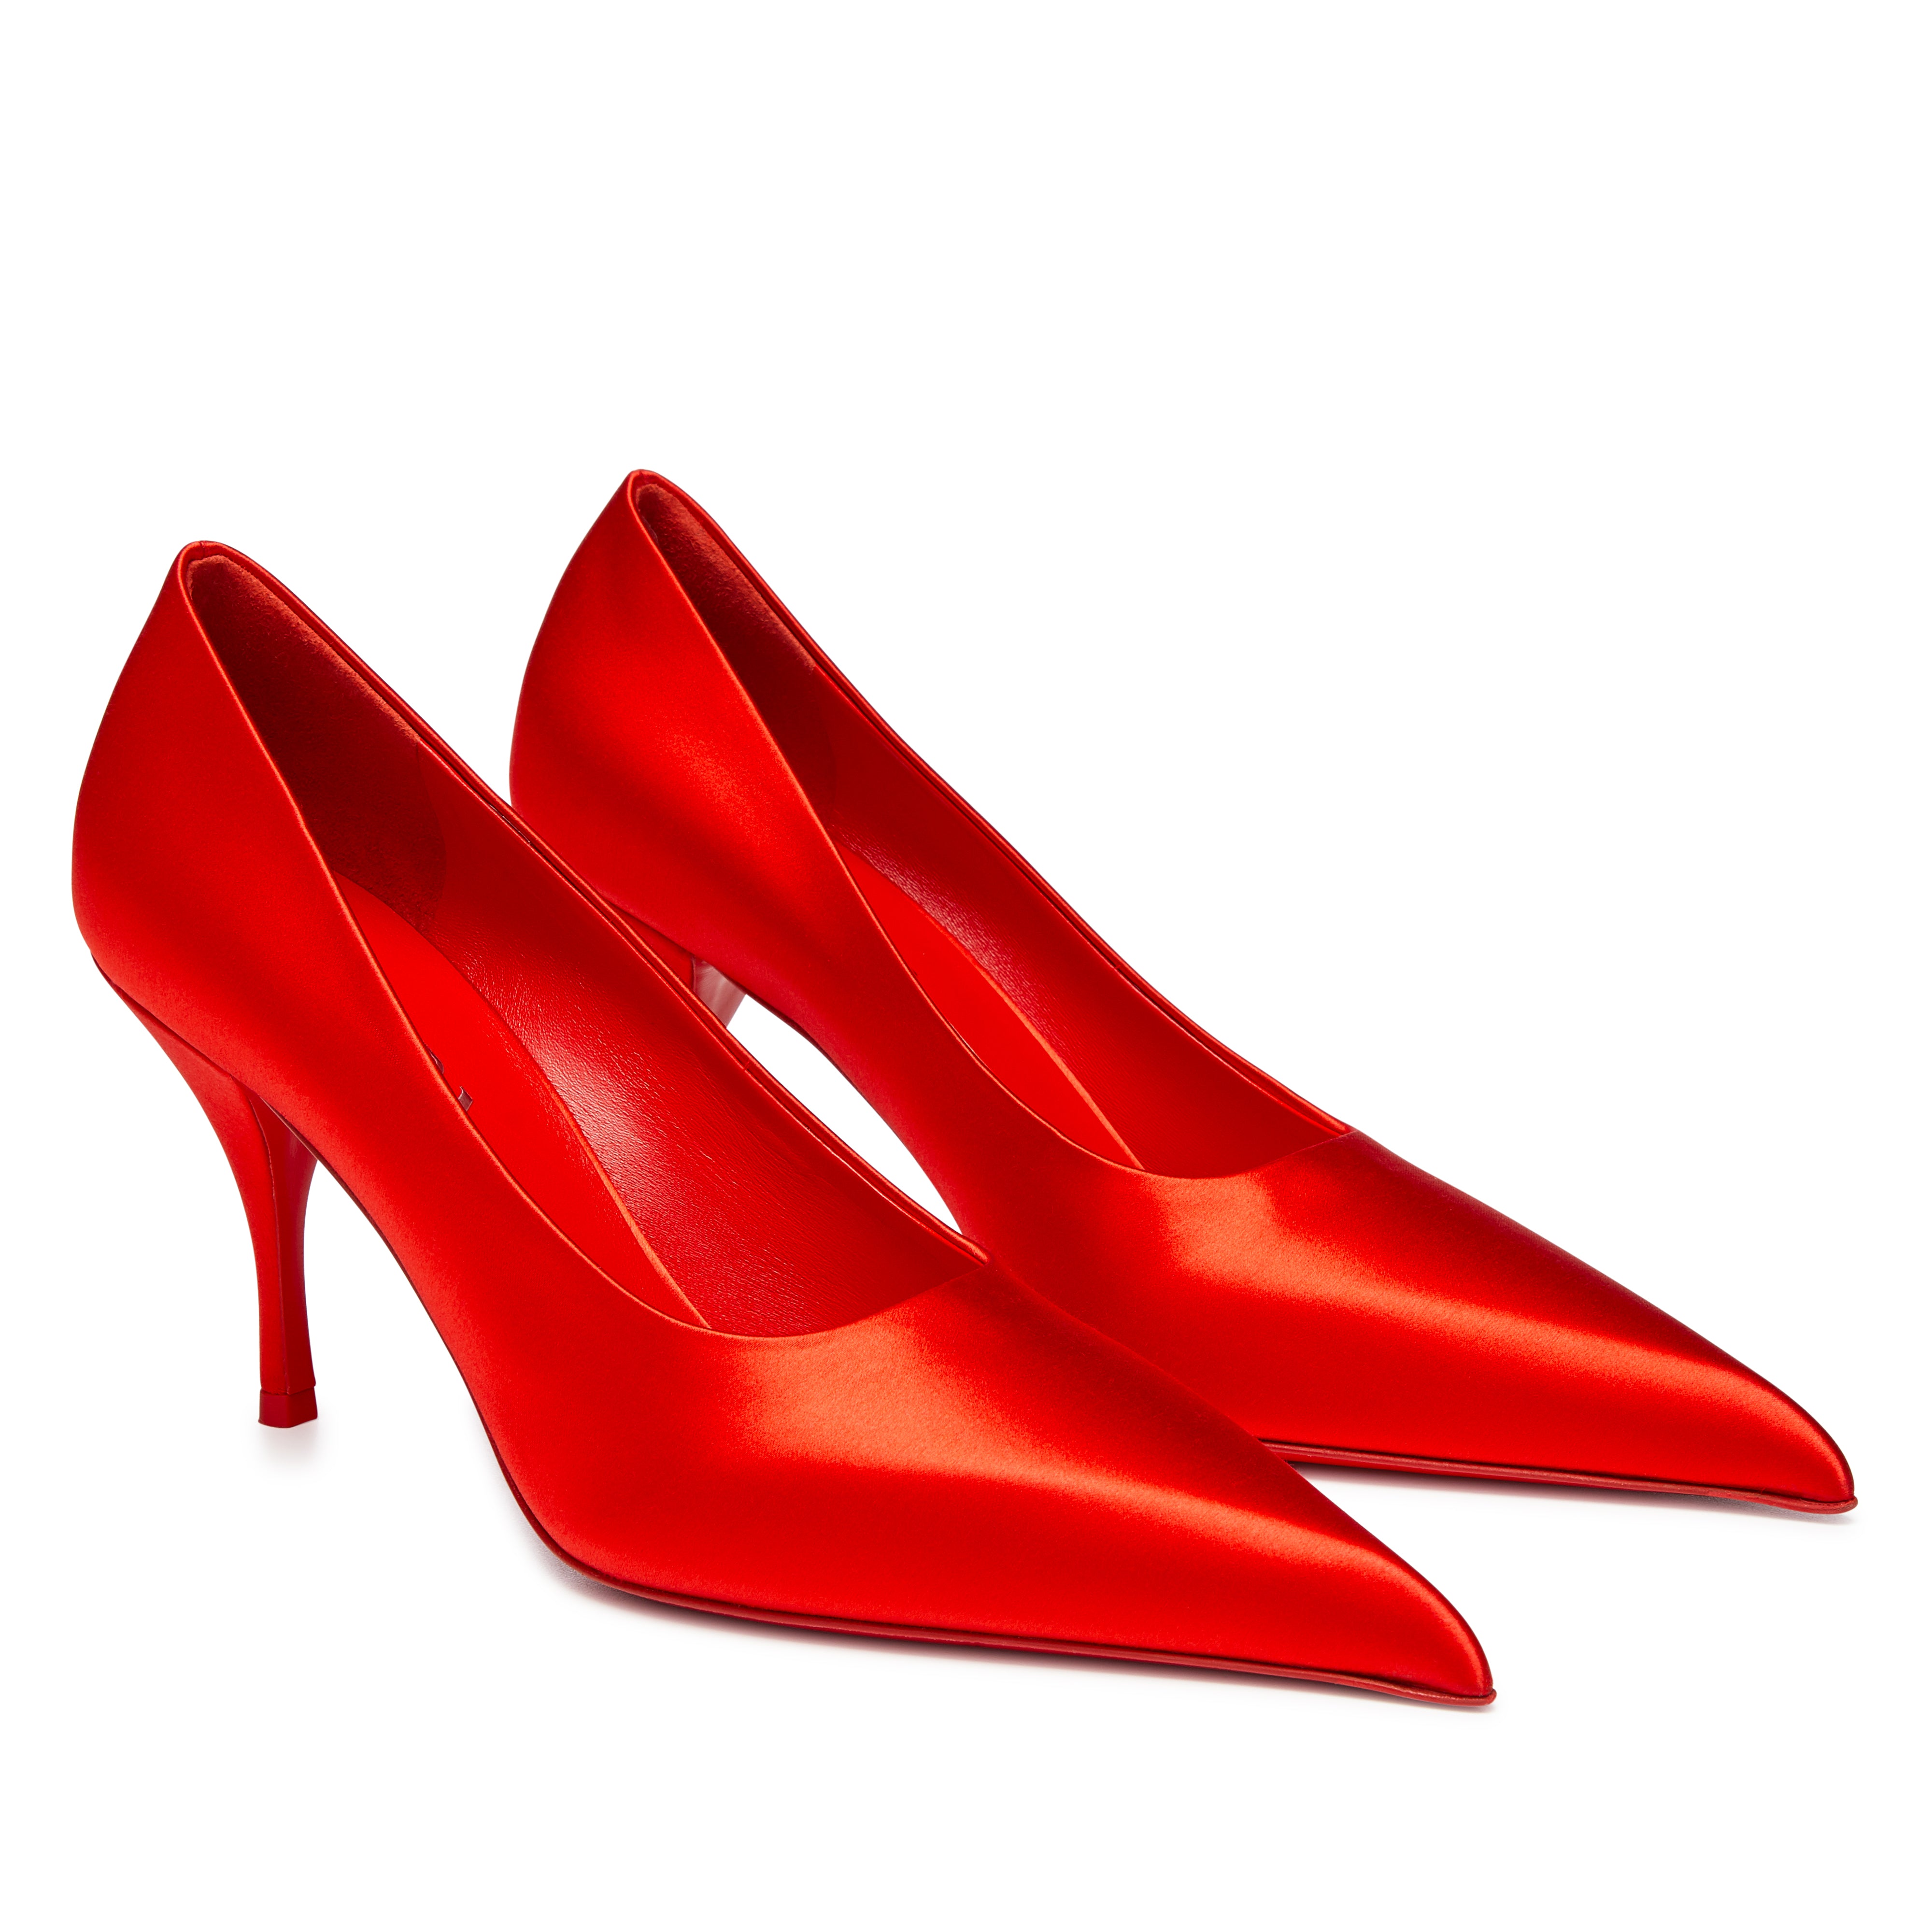 Prada - Women's Satin Pumps - (Red)